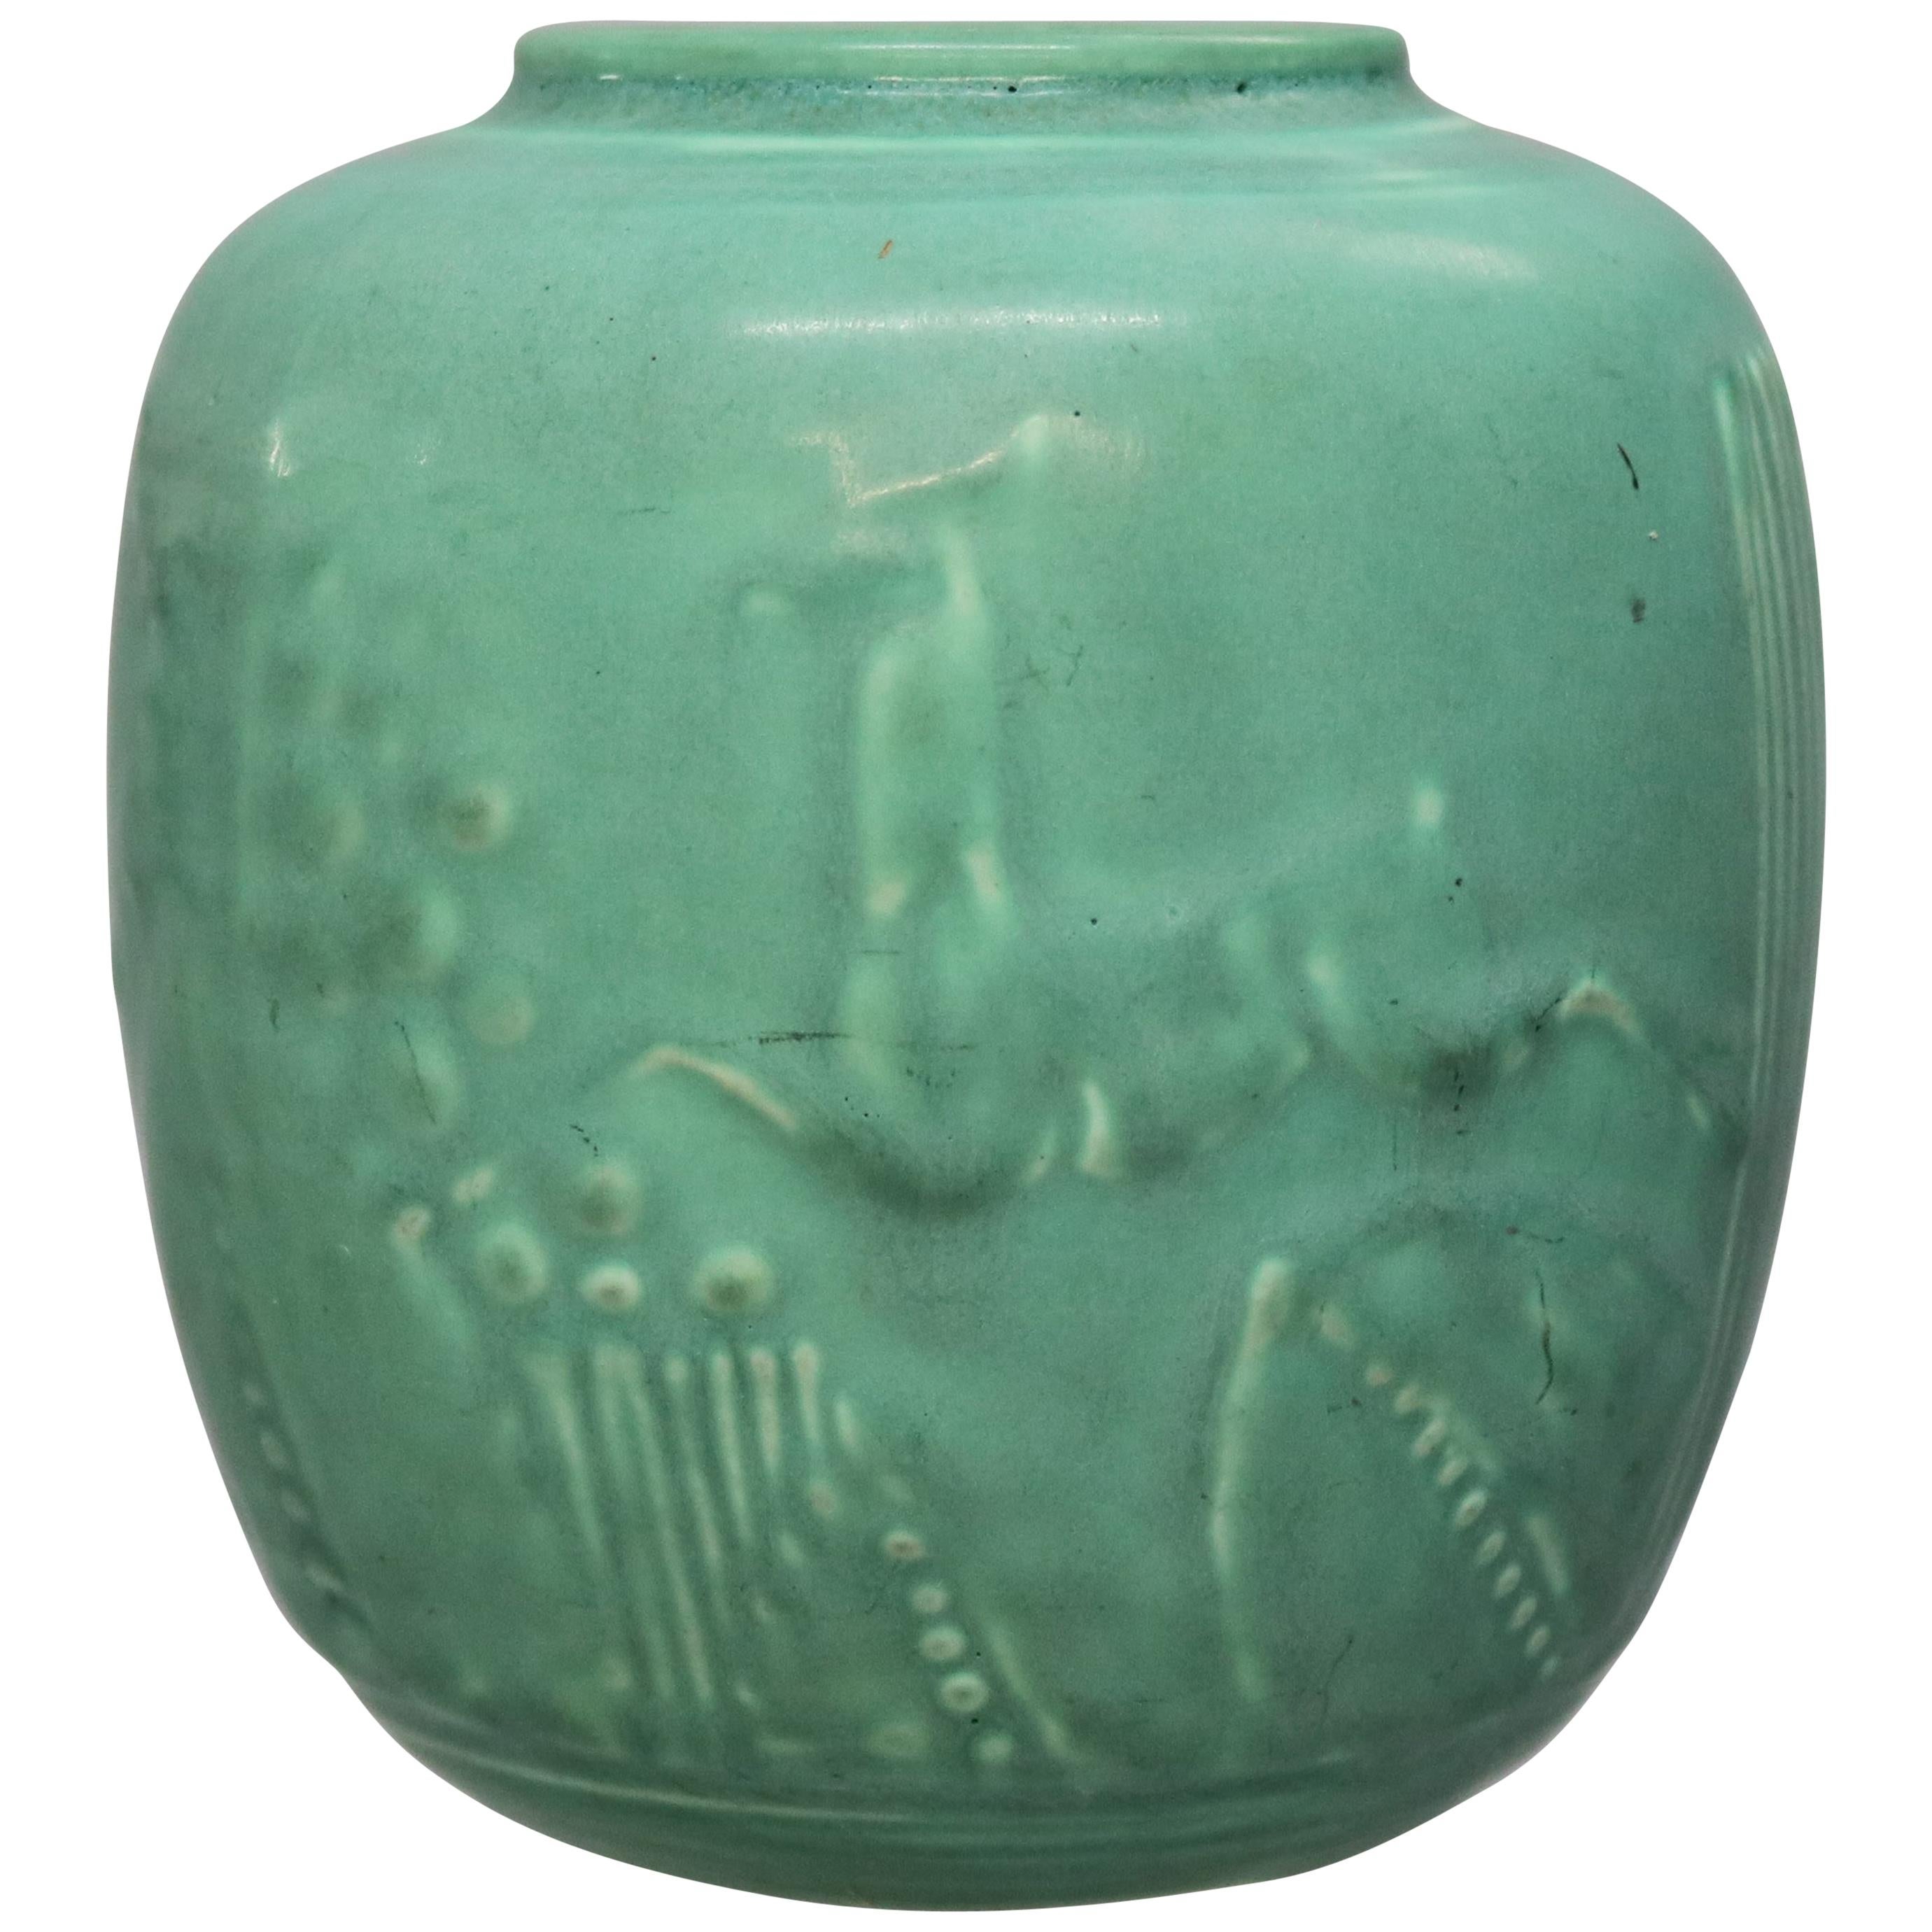 Antique Art Deco Rookwood Art Pottery Deer Vase, Dated 1932